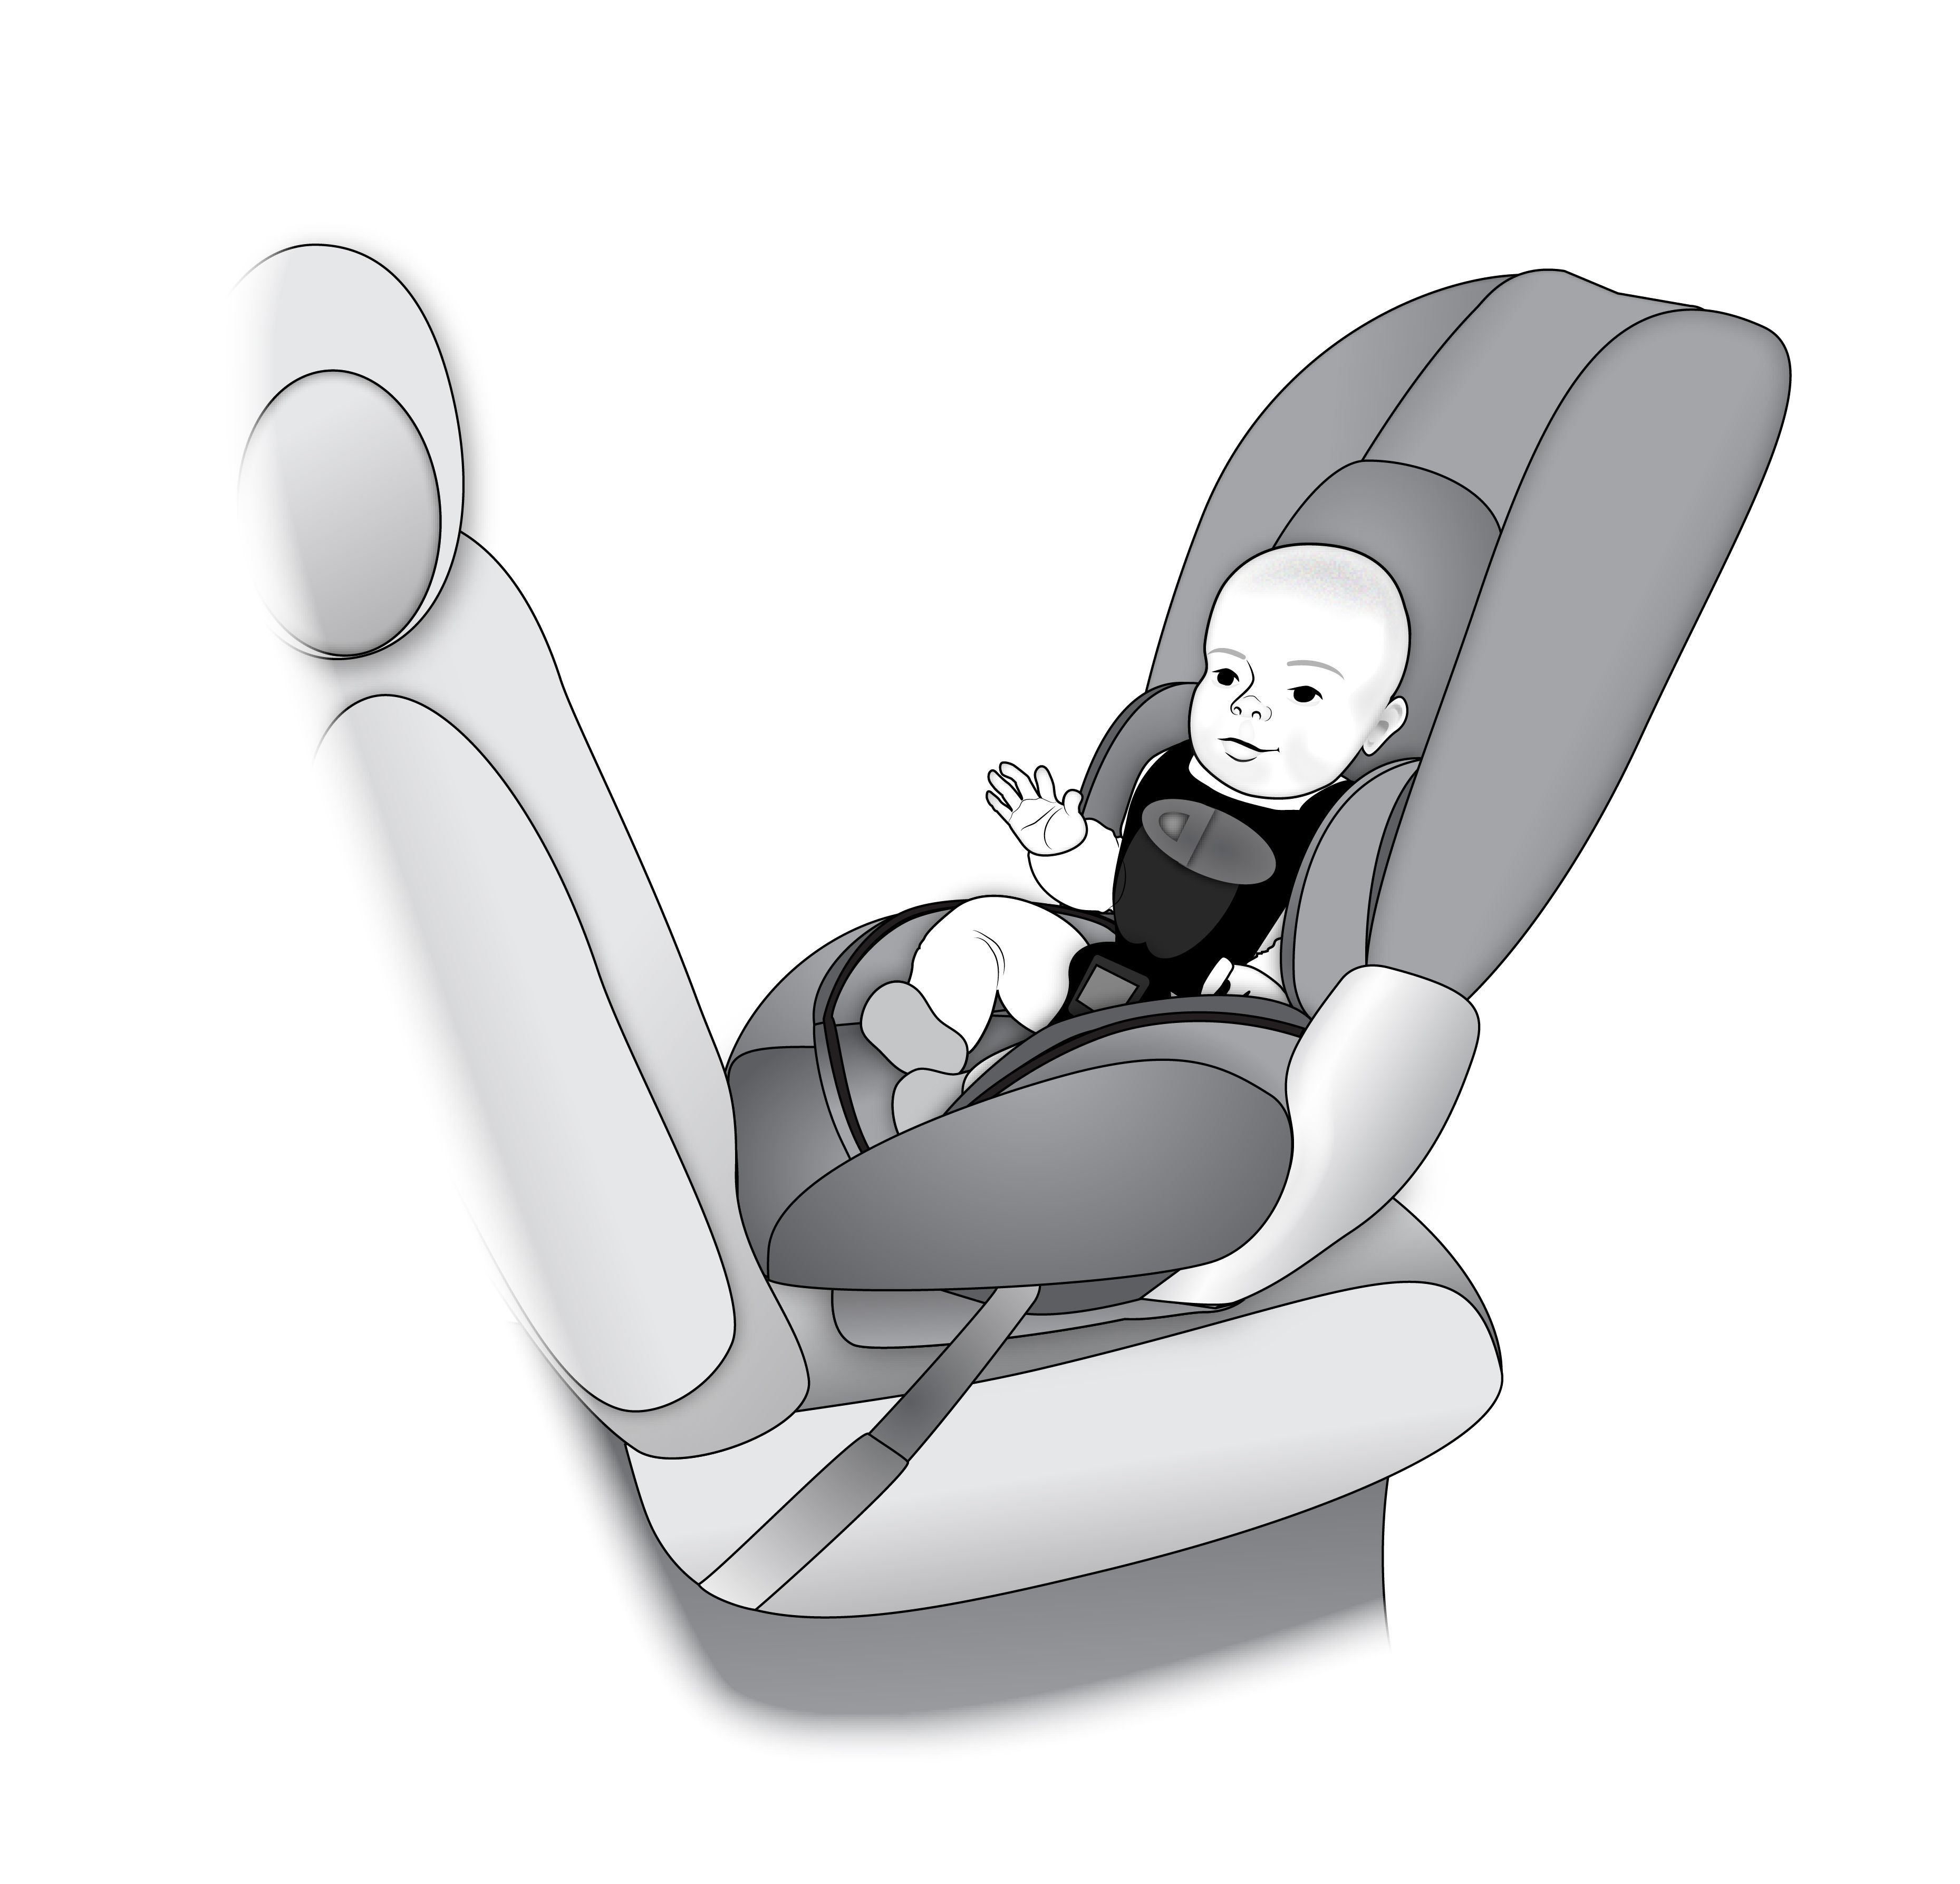 Baby in rear-facing car seat